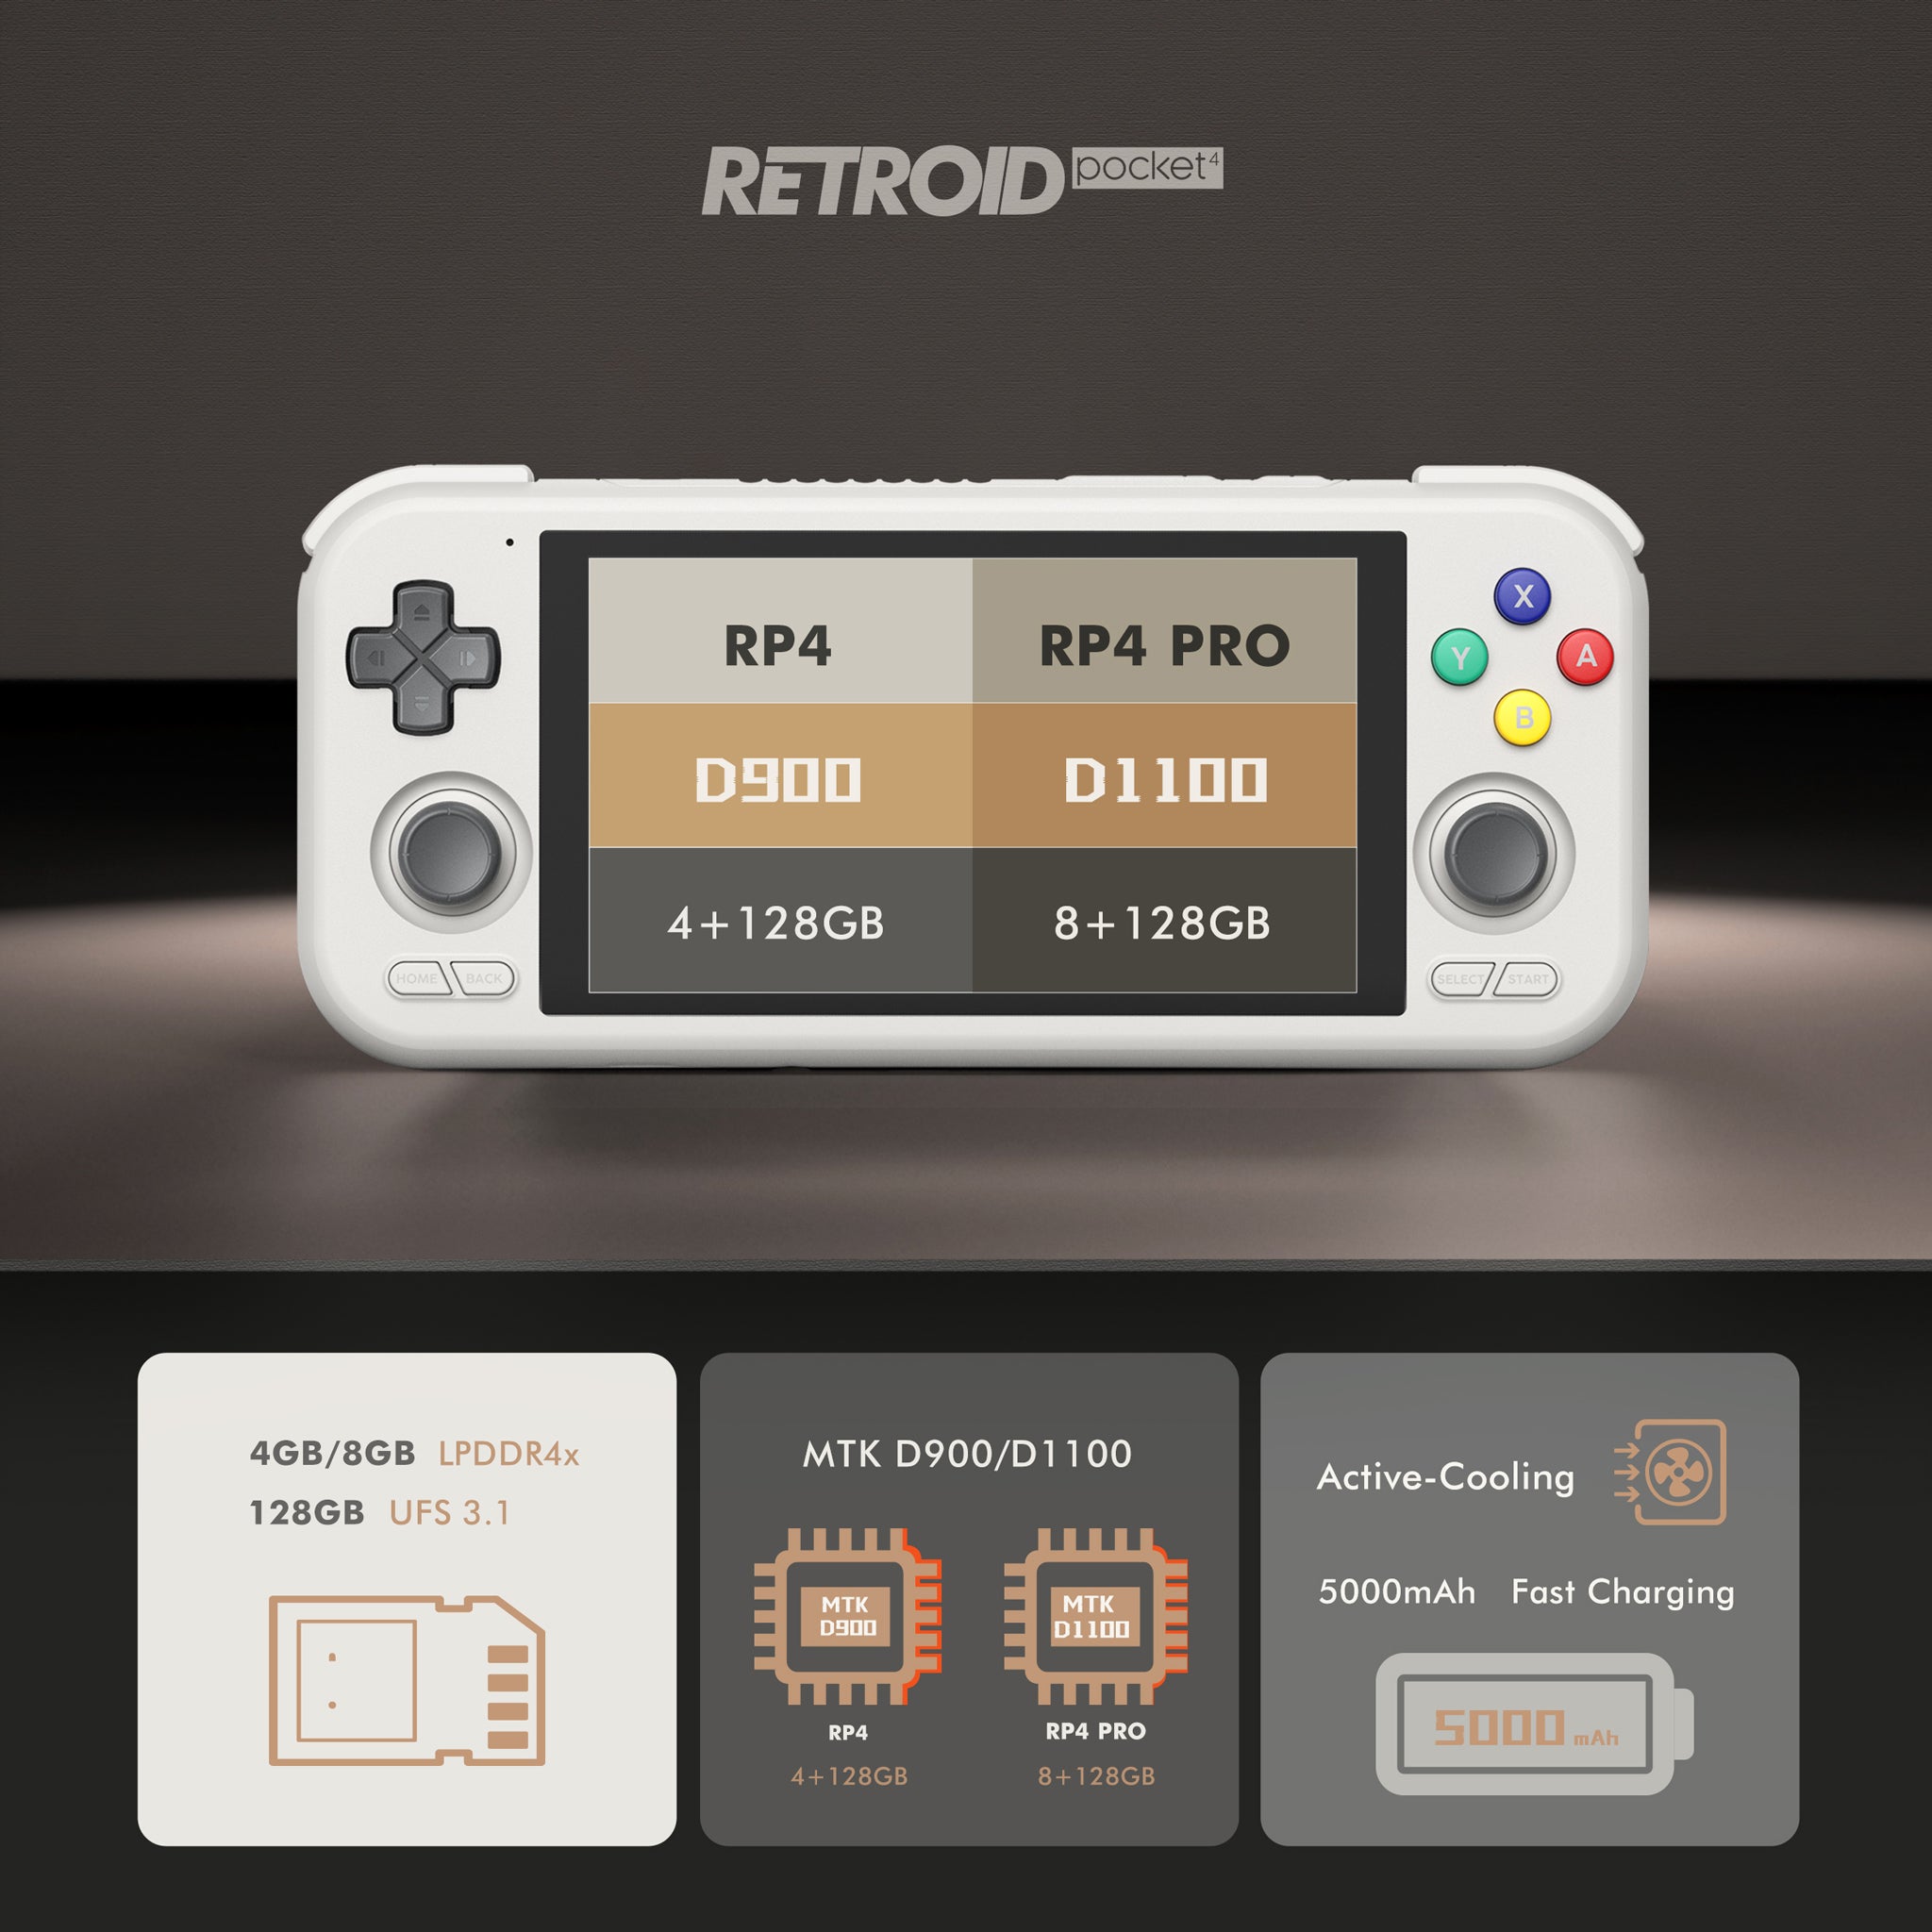 Retroid Pocket 4 Pro The Pocket 4 Pro Retro Gaming Handheld